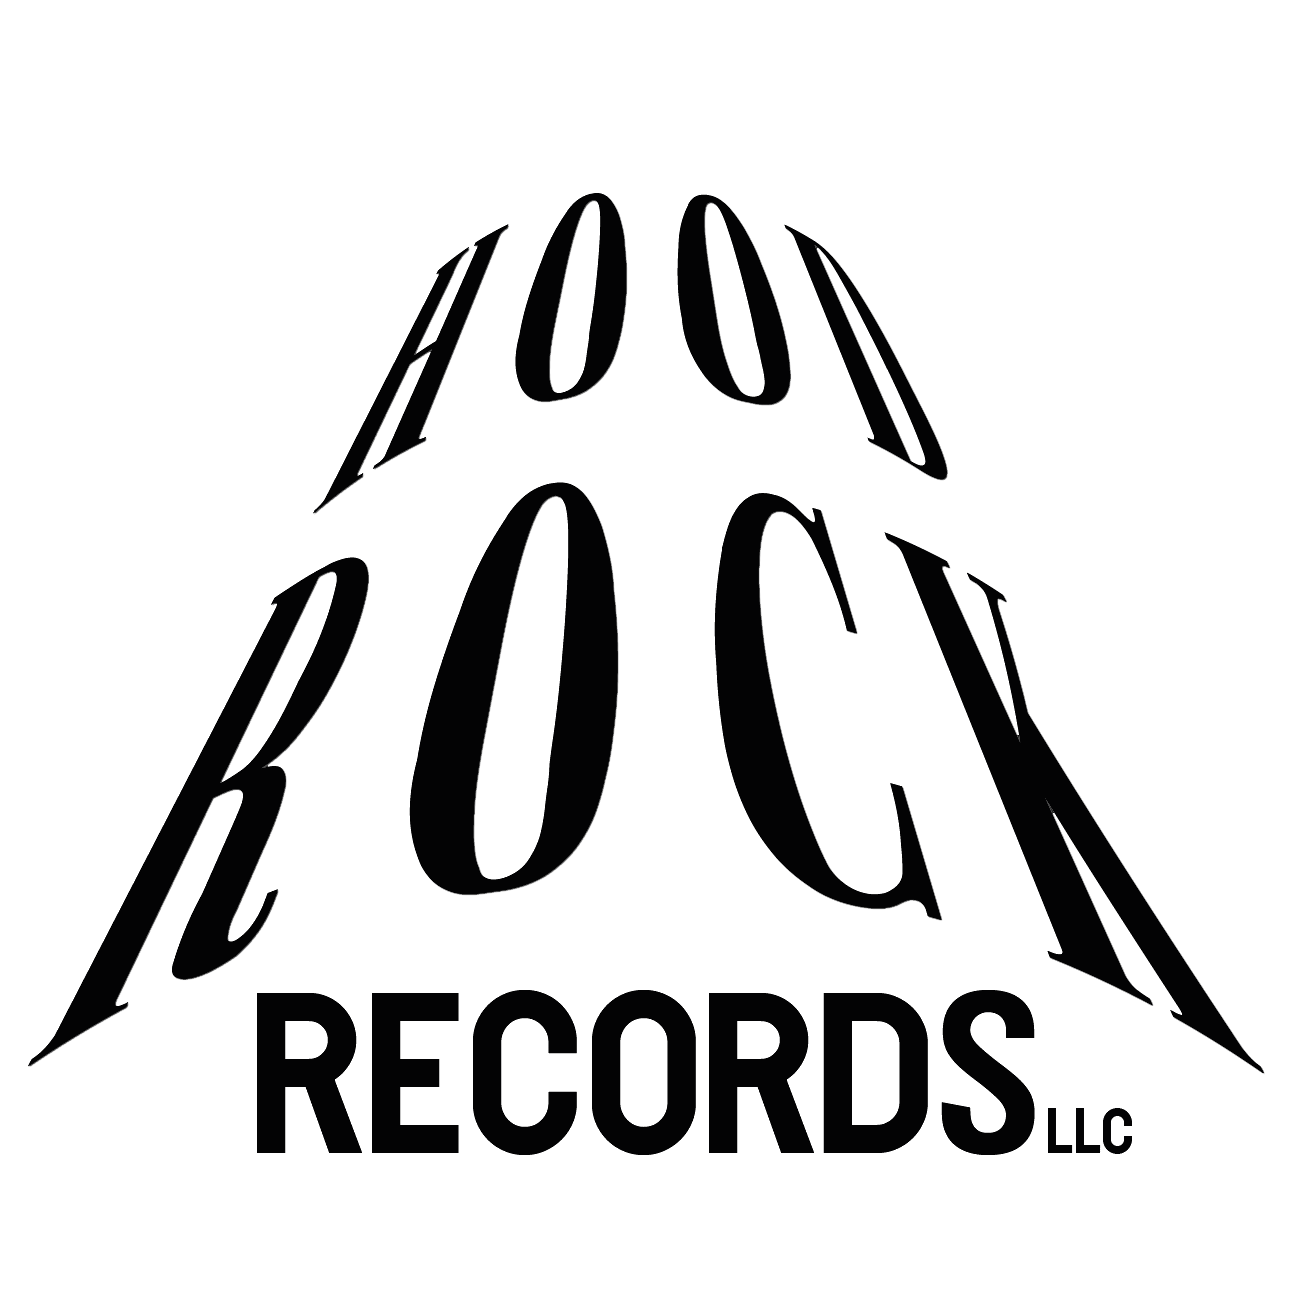 Hood Rock Records